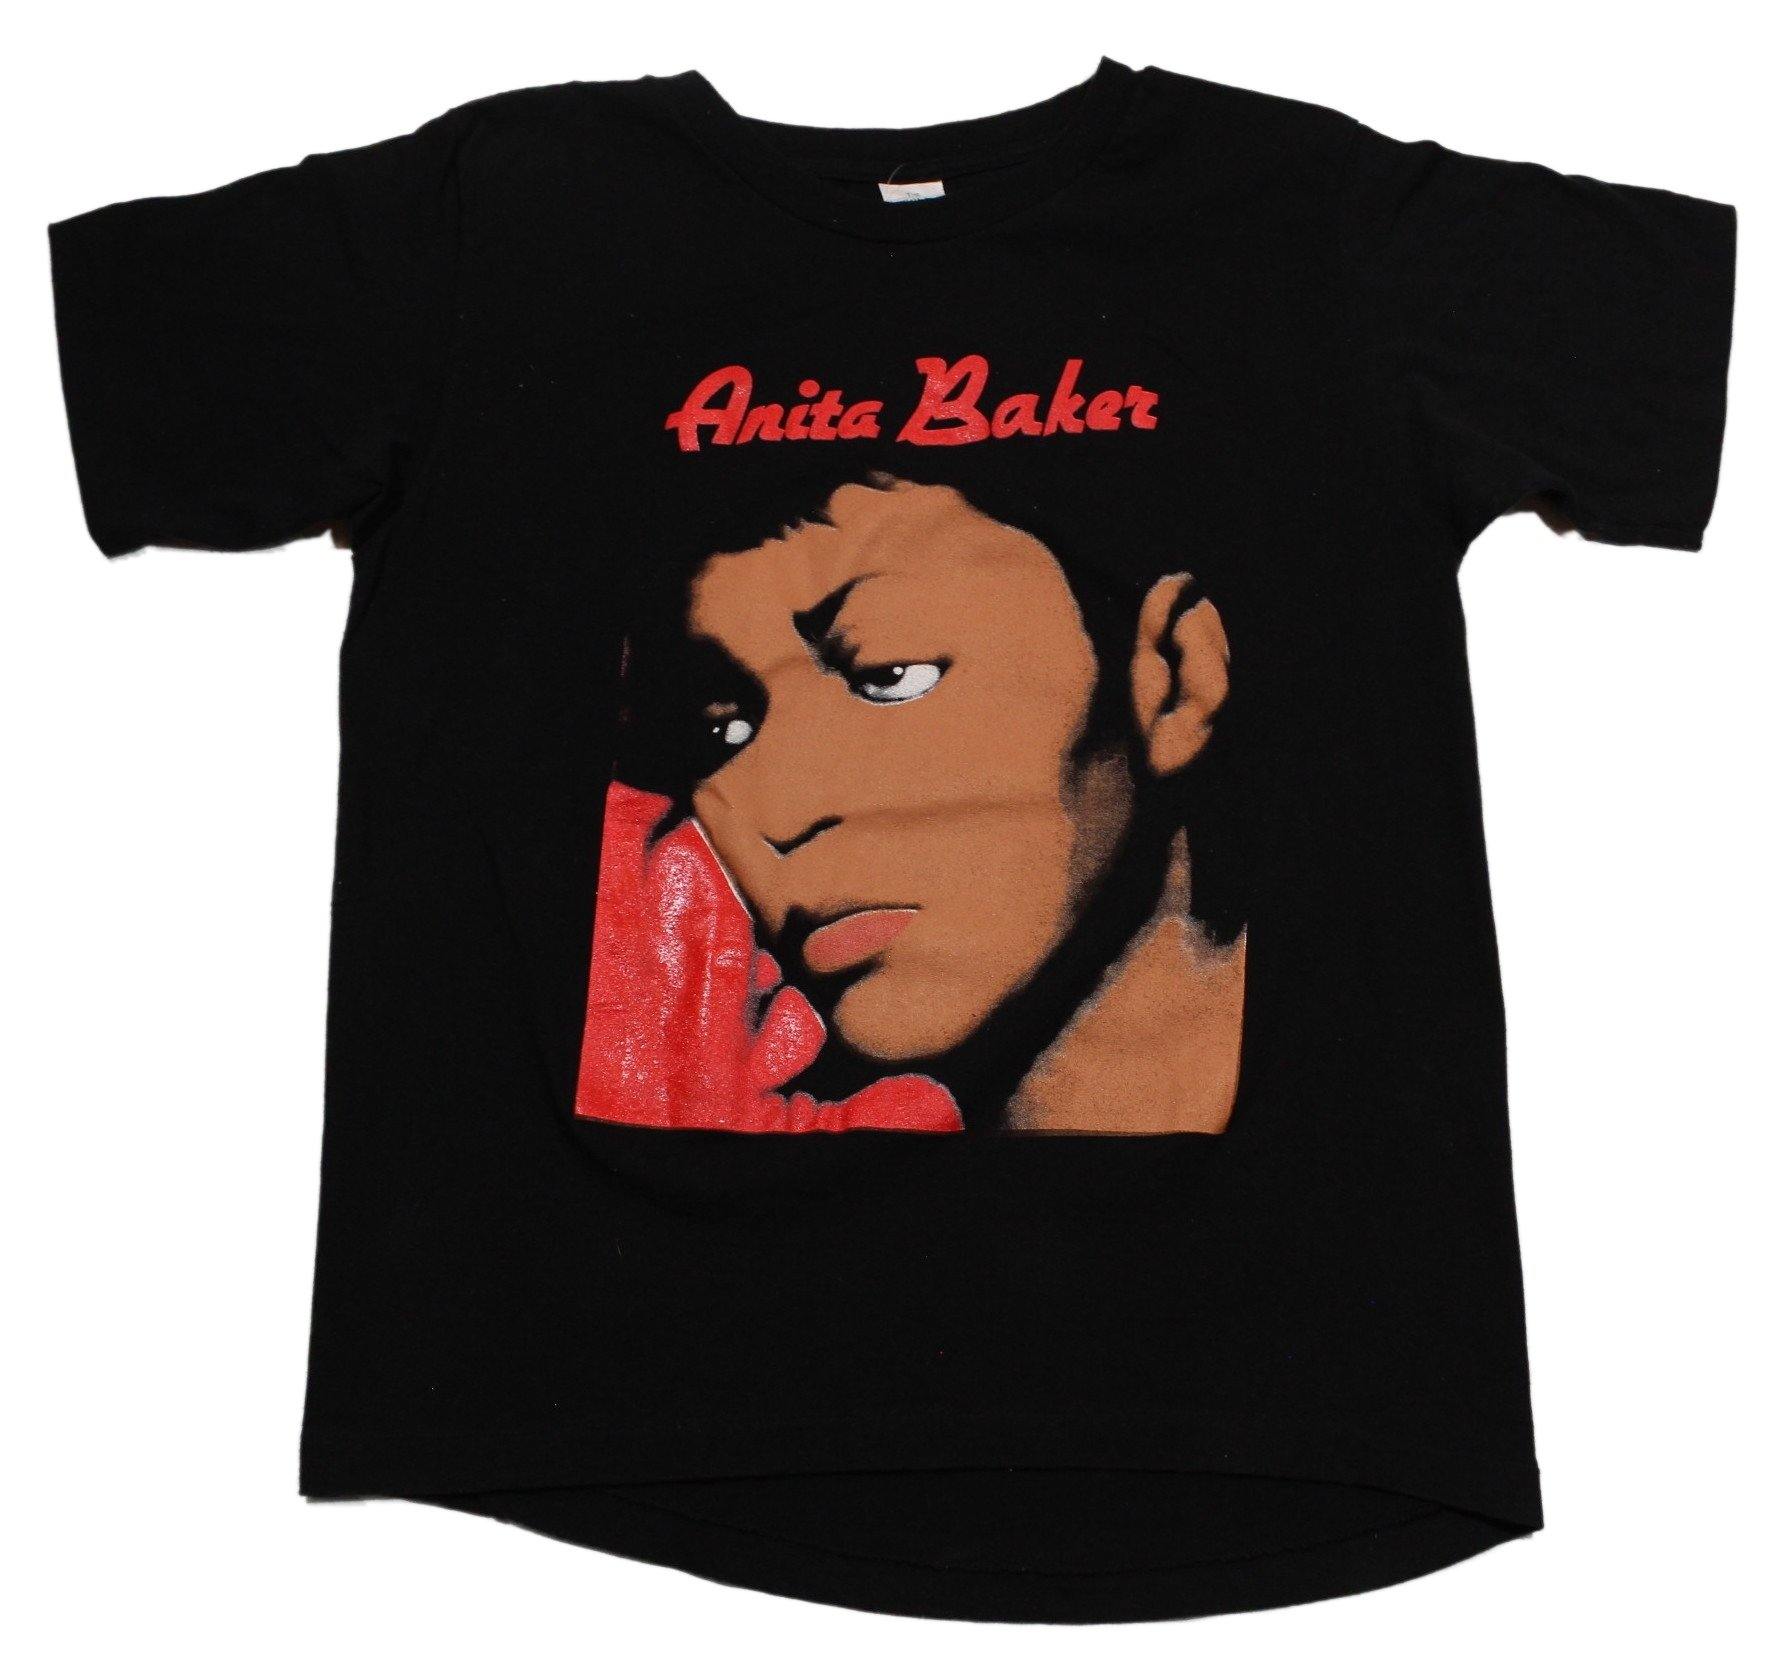 Vintage Anita Baker & Gladys Knight "Split" T-Shirt - jointcustodydc